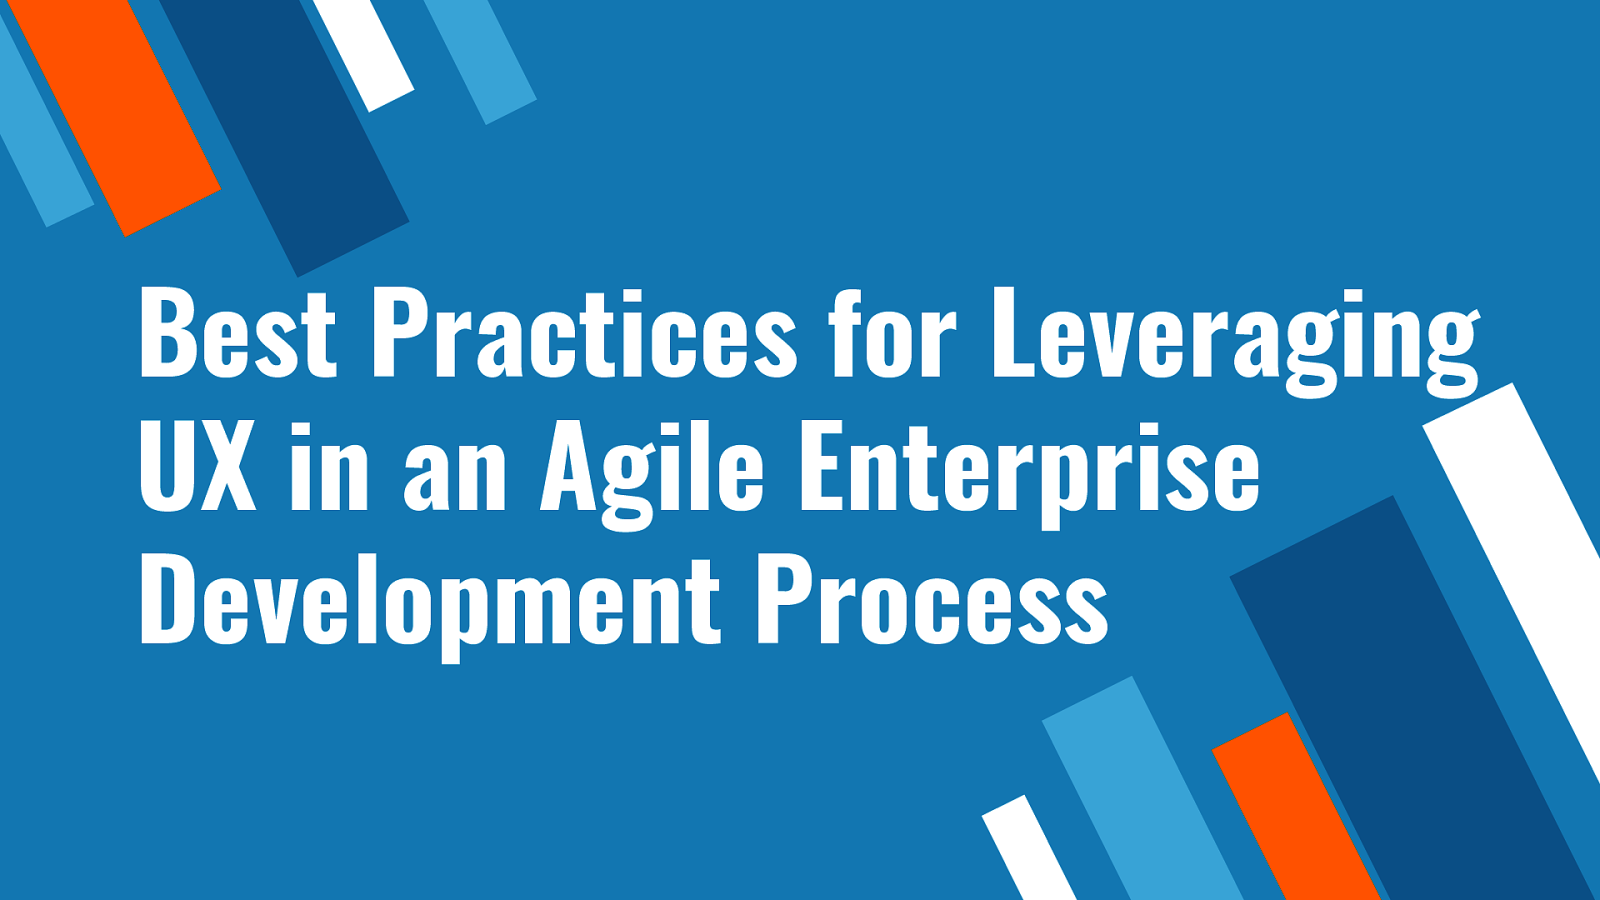 Best Practices for Leveraging UX in an Agile Enterprise Development Process